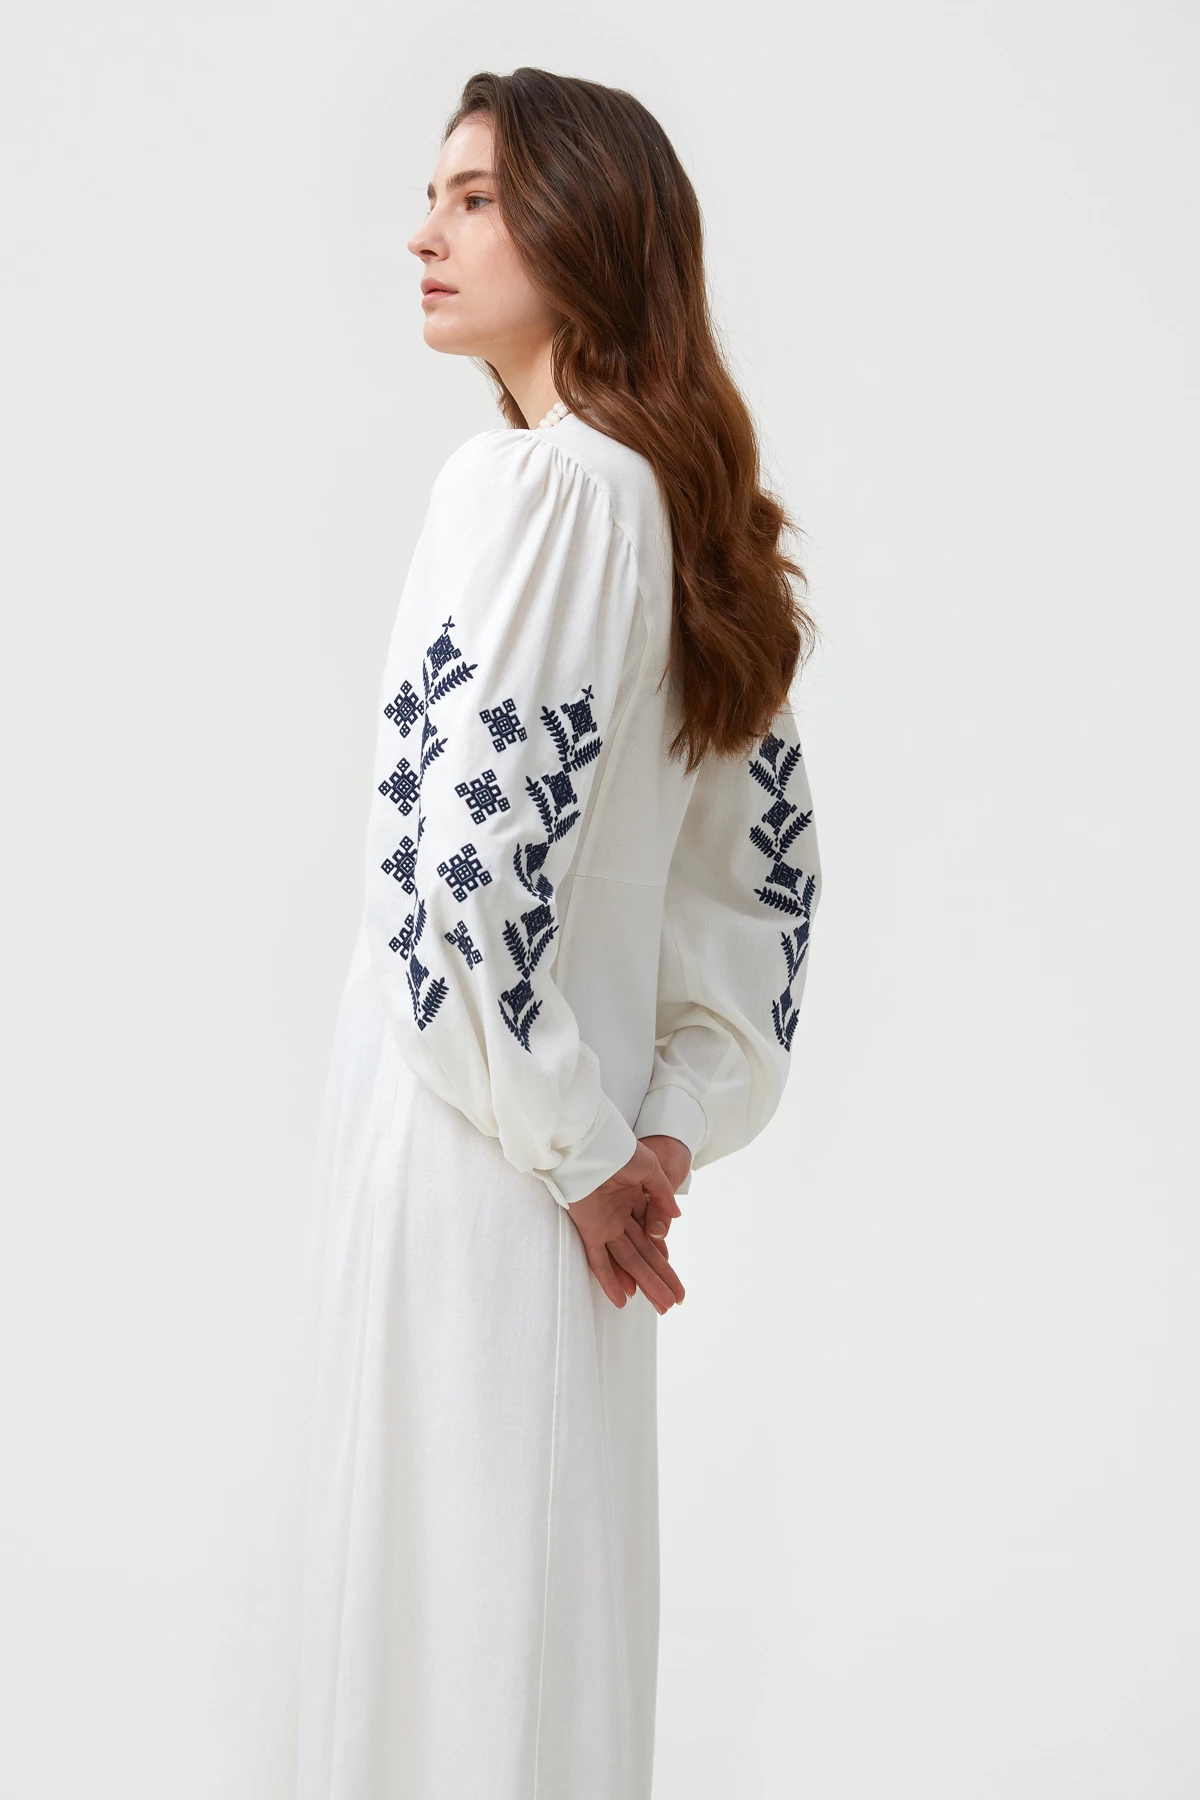 Milky linen vyshyvanka dress with rhombus embroidery, photo 3